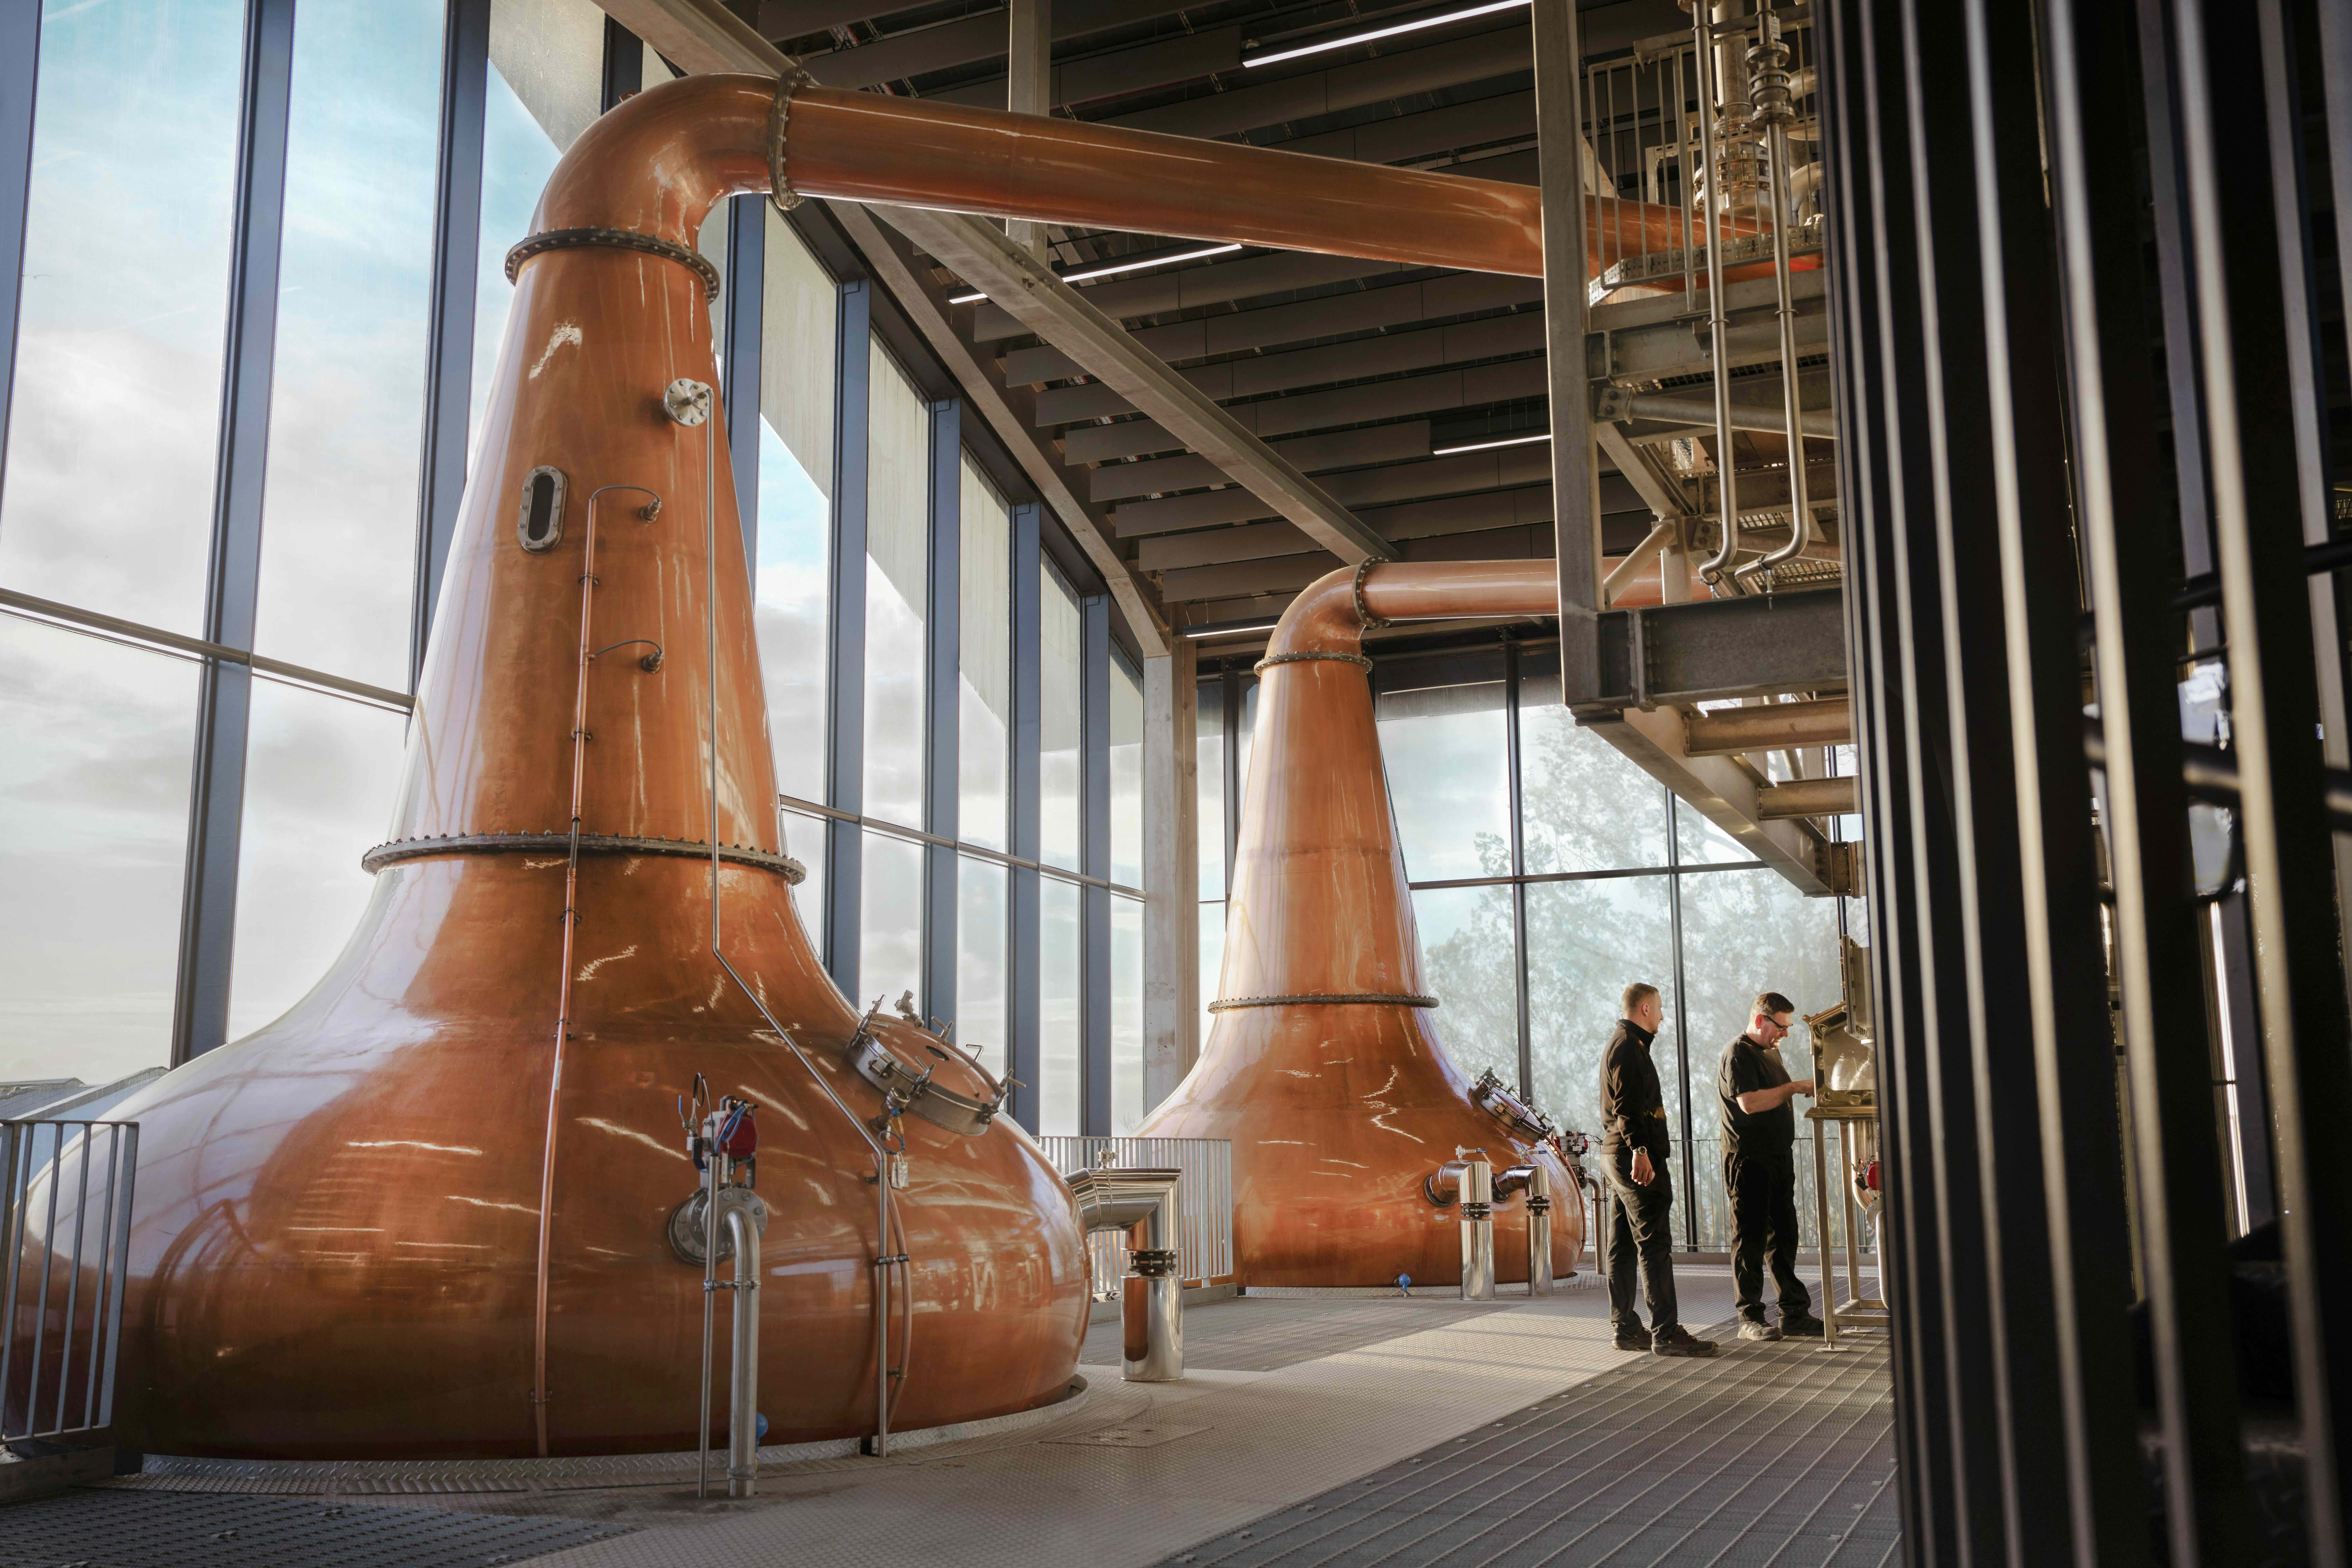 copper stills in glass distillery